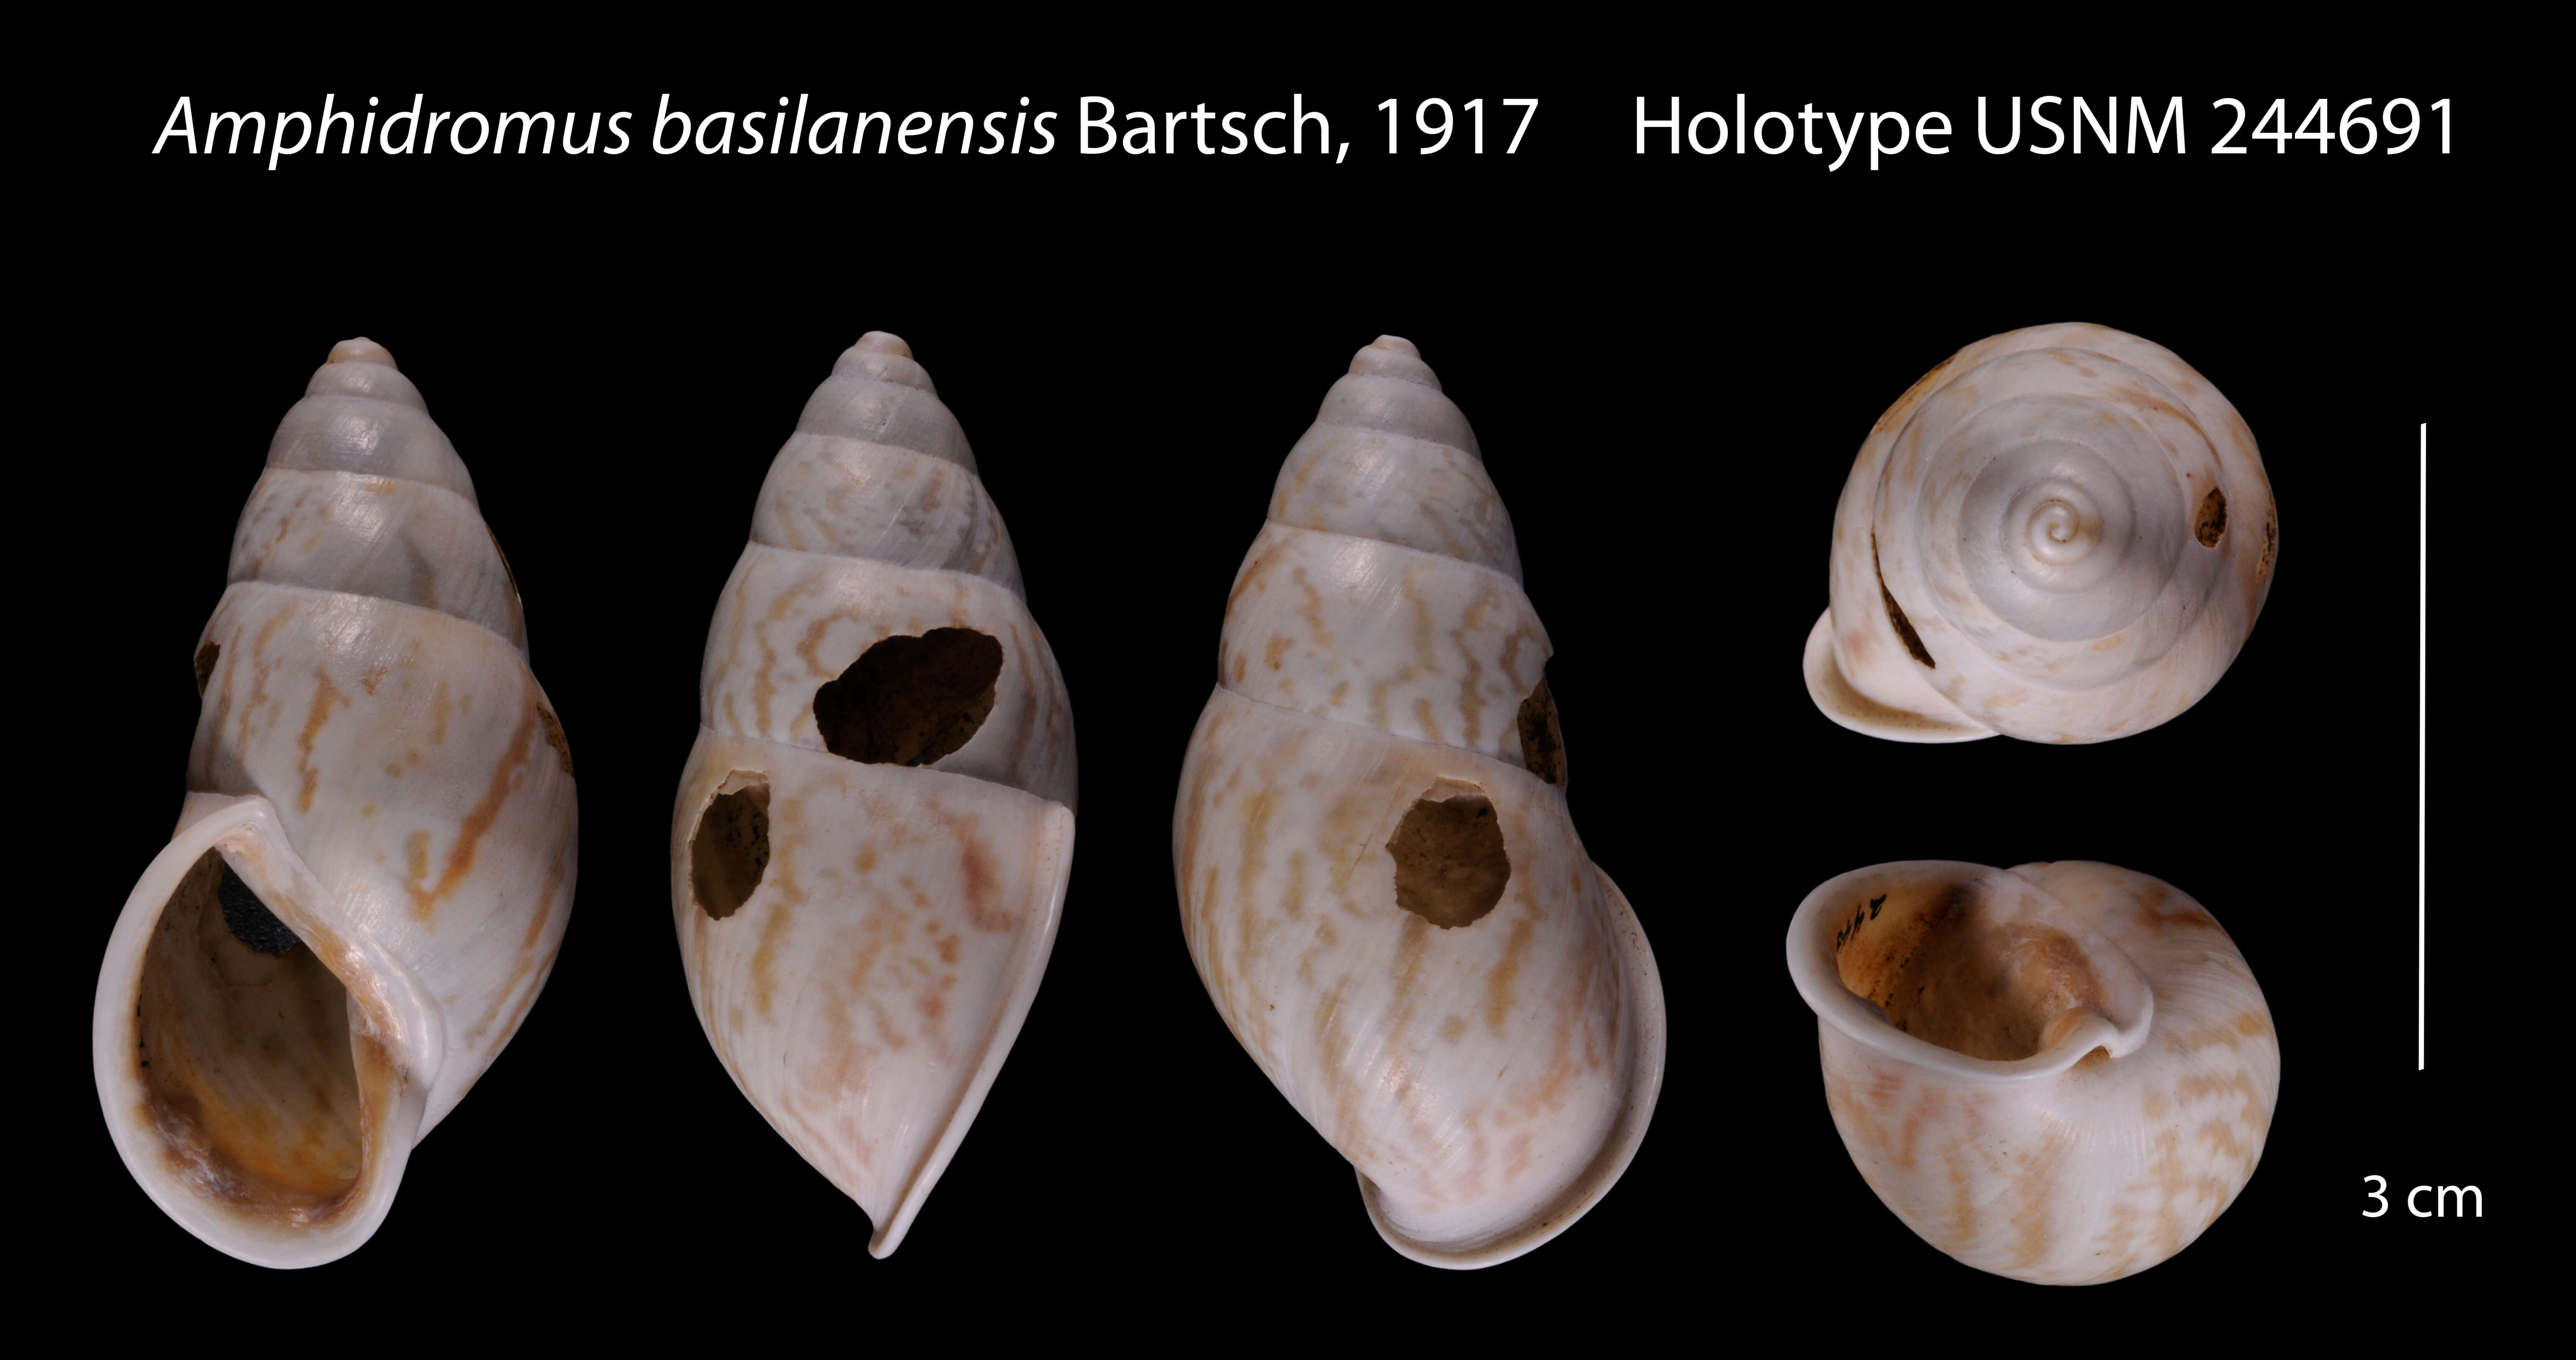 Image of Amphidromus basilanensis Bartsch 1917